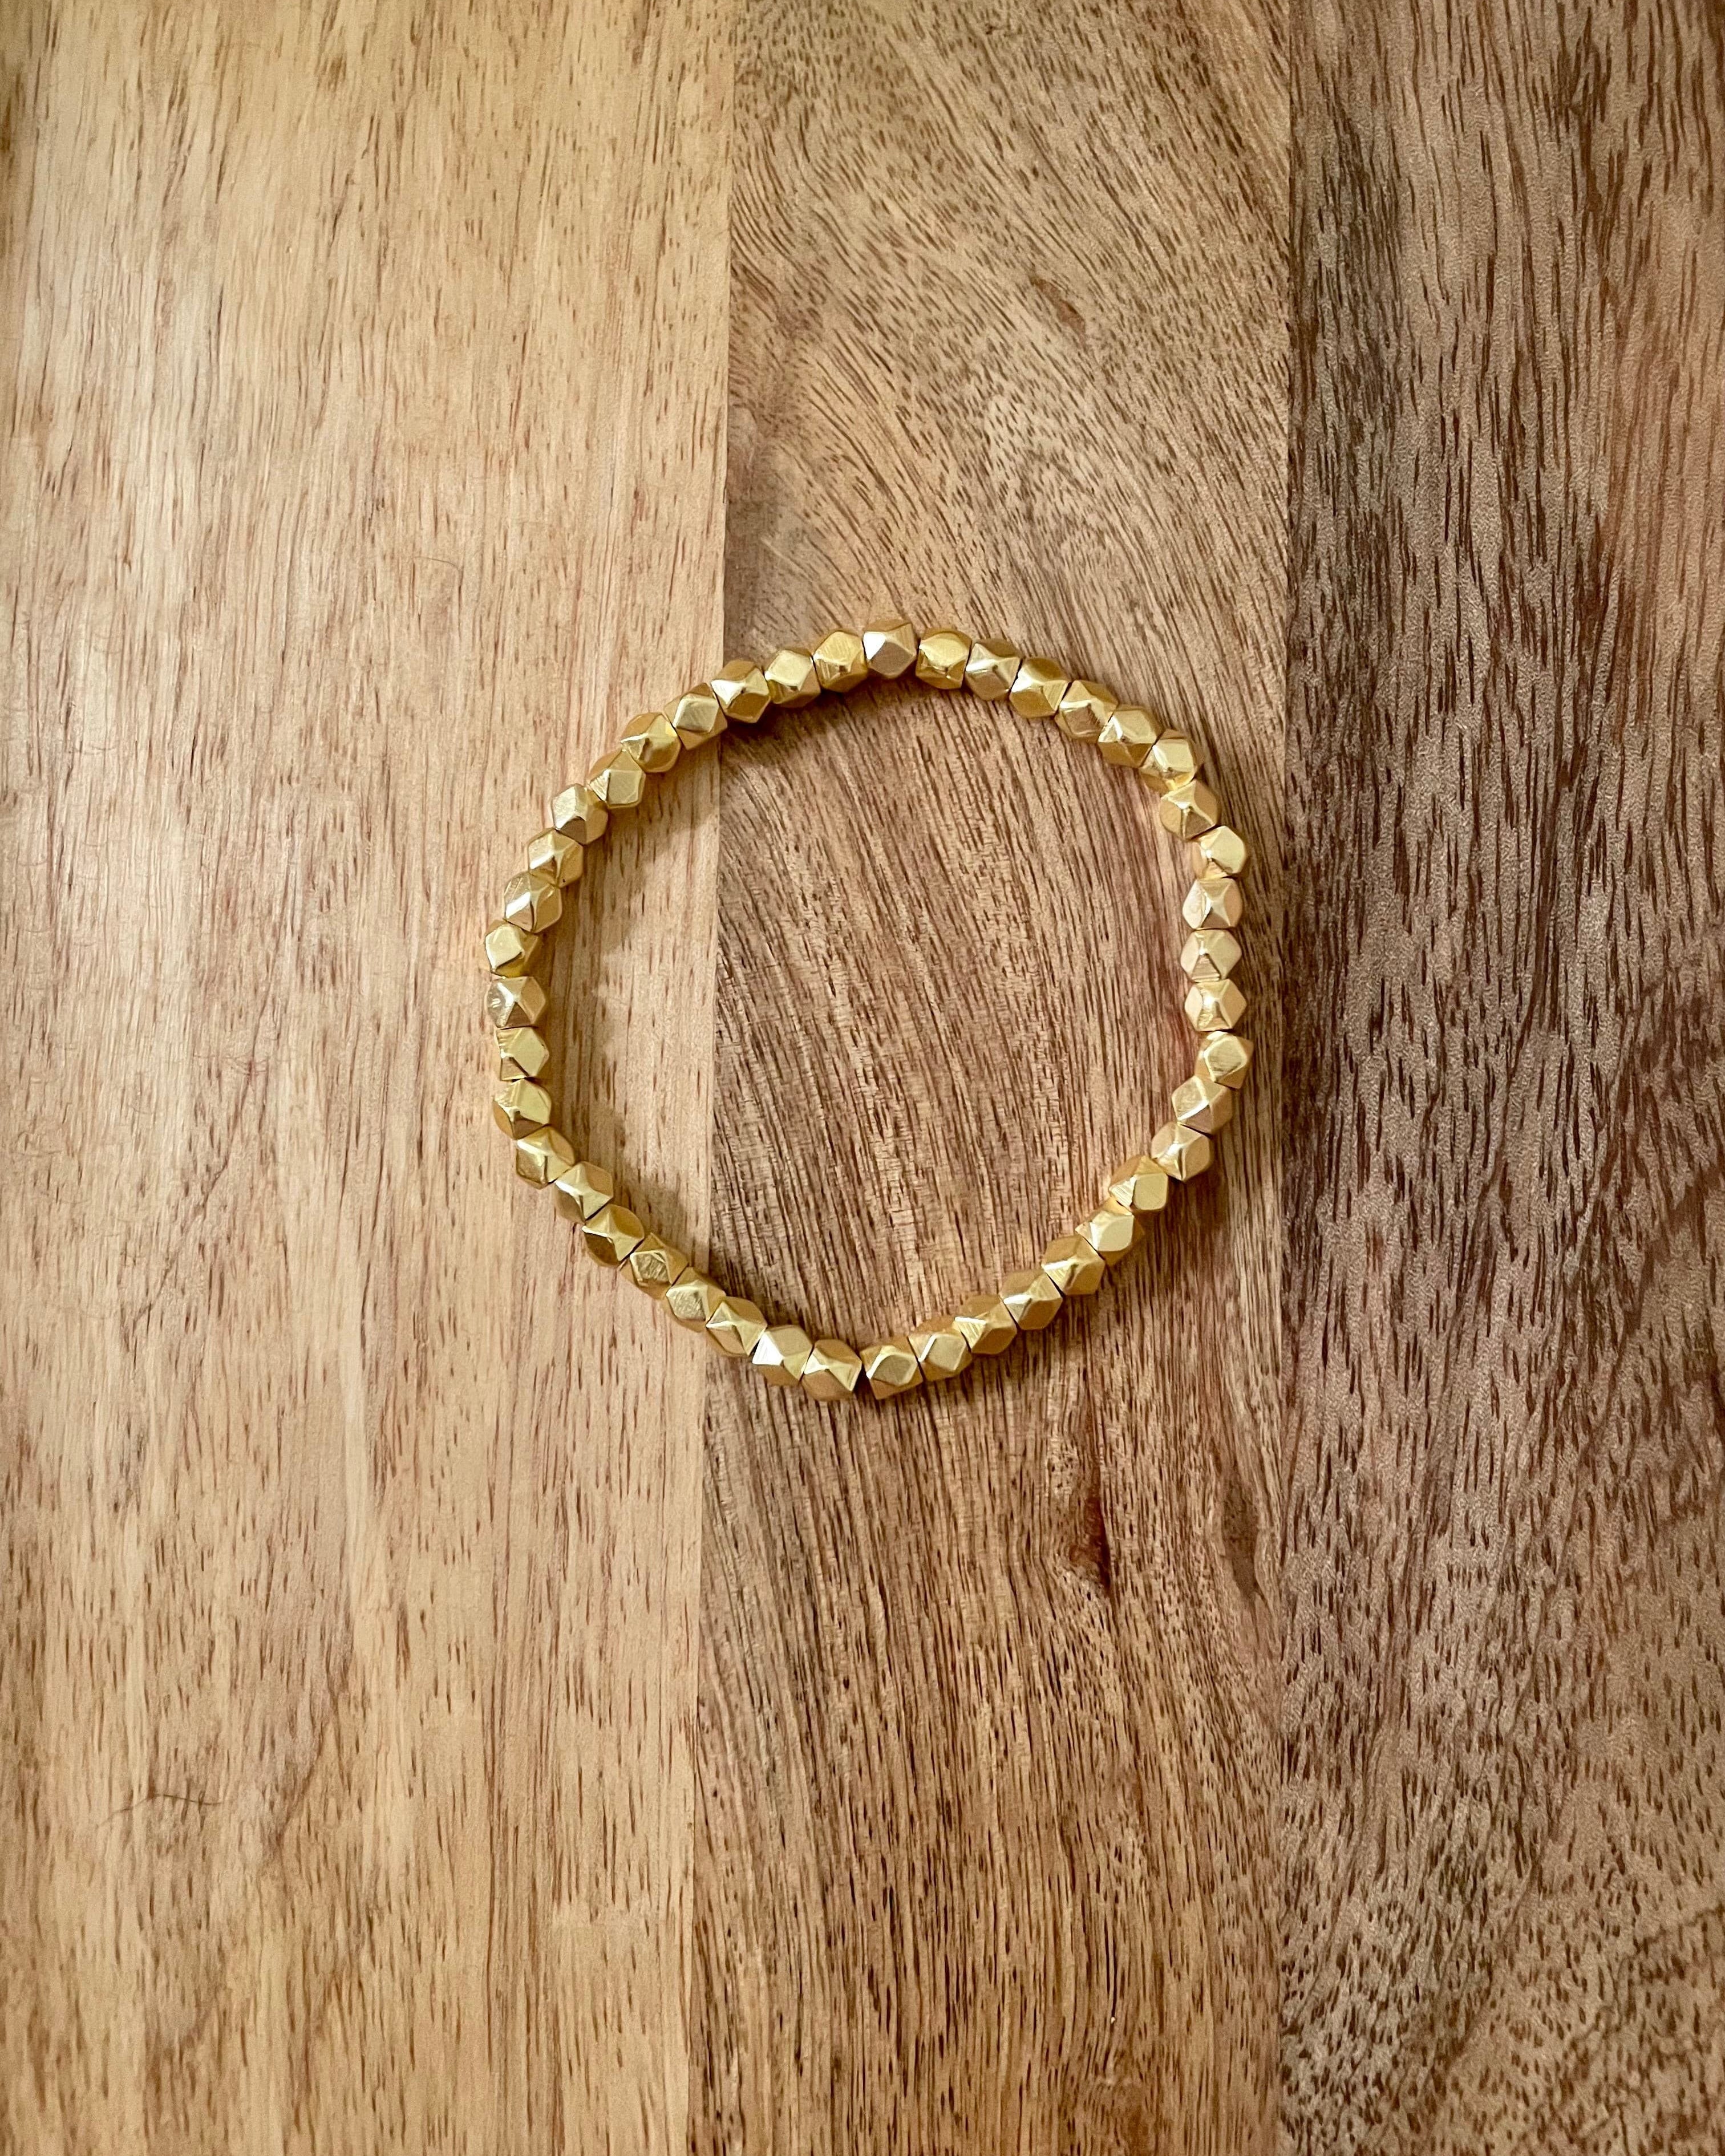 Gold Geometric Beaded Bracelet.